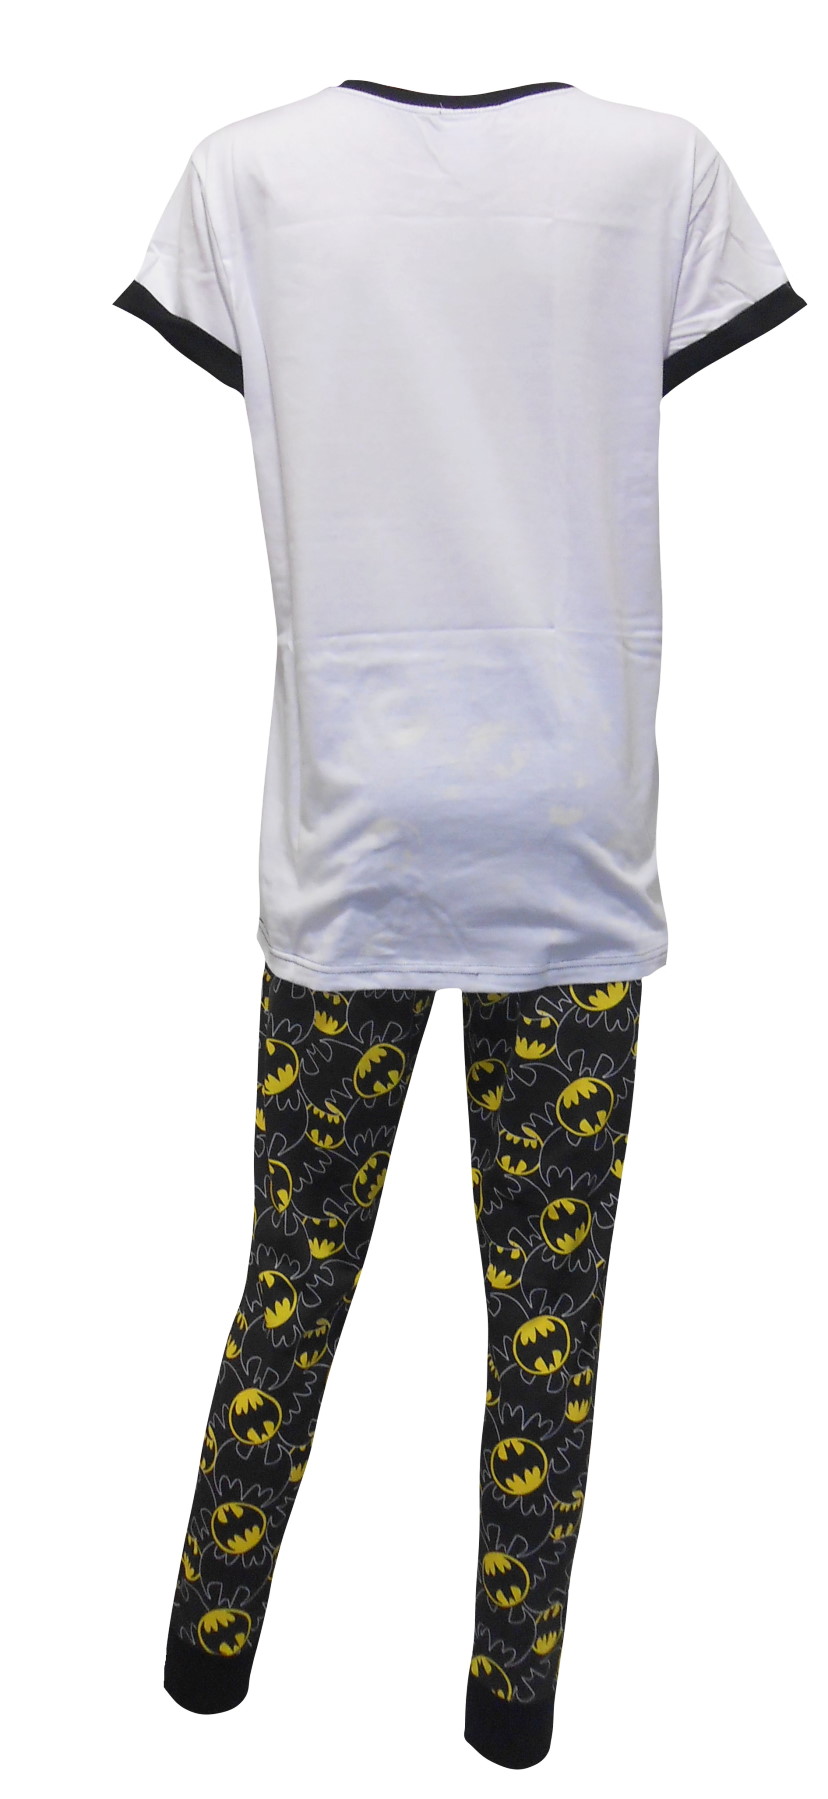 Batgirl Pyjamas PJ88 (1).JPG  by Thingimijigs